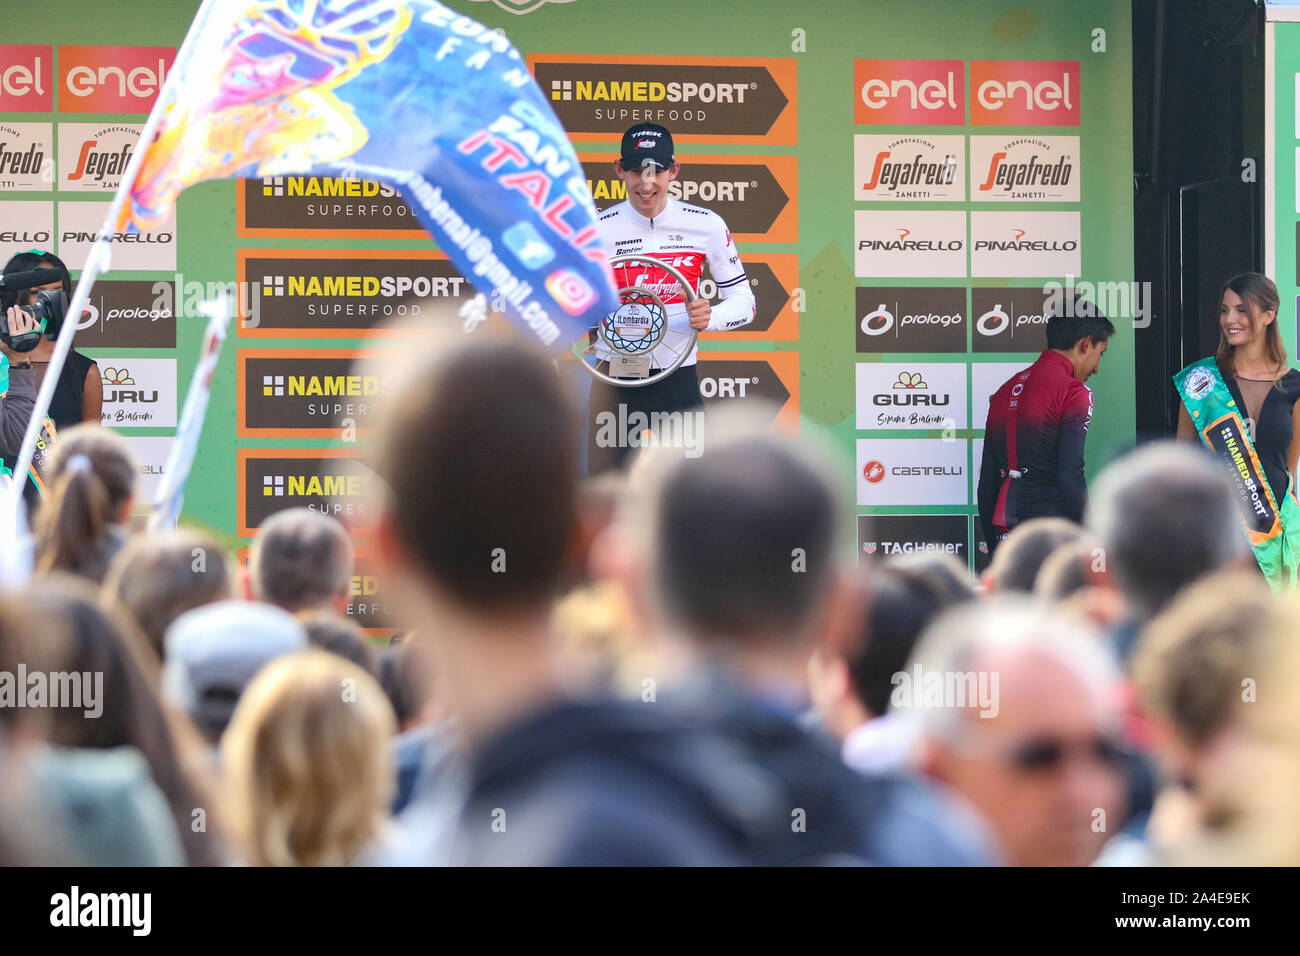 Bauke Mollema von Team Trek Segafredo Siegertreppchen Präsentation Il Giro di Lombardia 2019 Radtour der Lombardei Comer see Italien Stockfoto